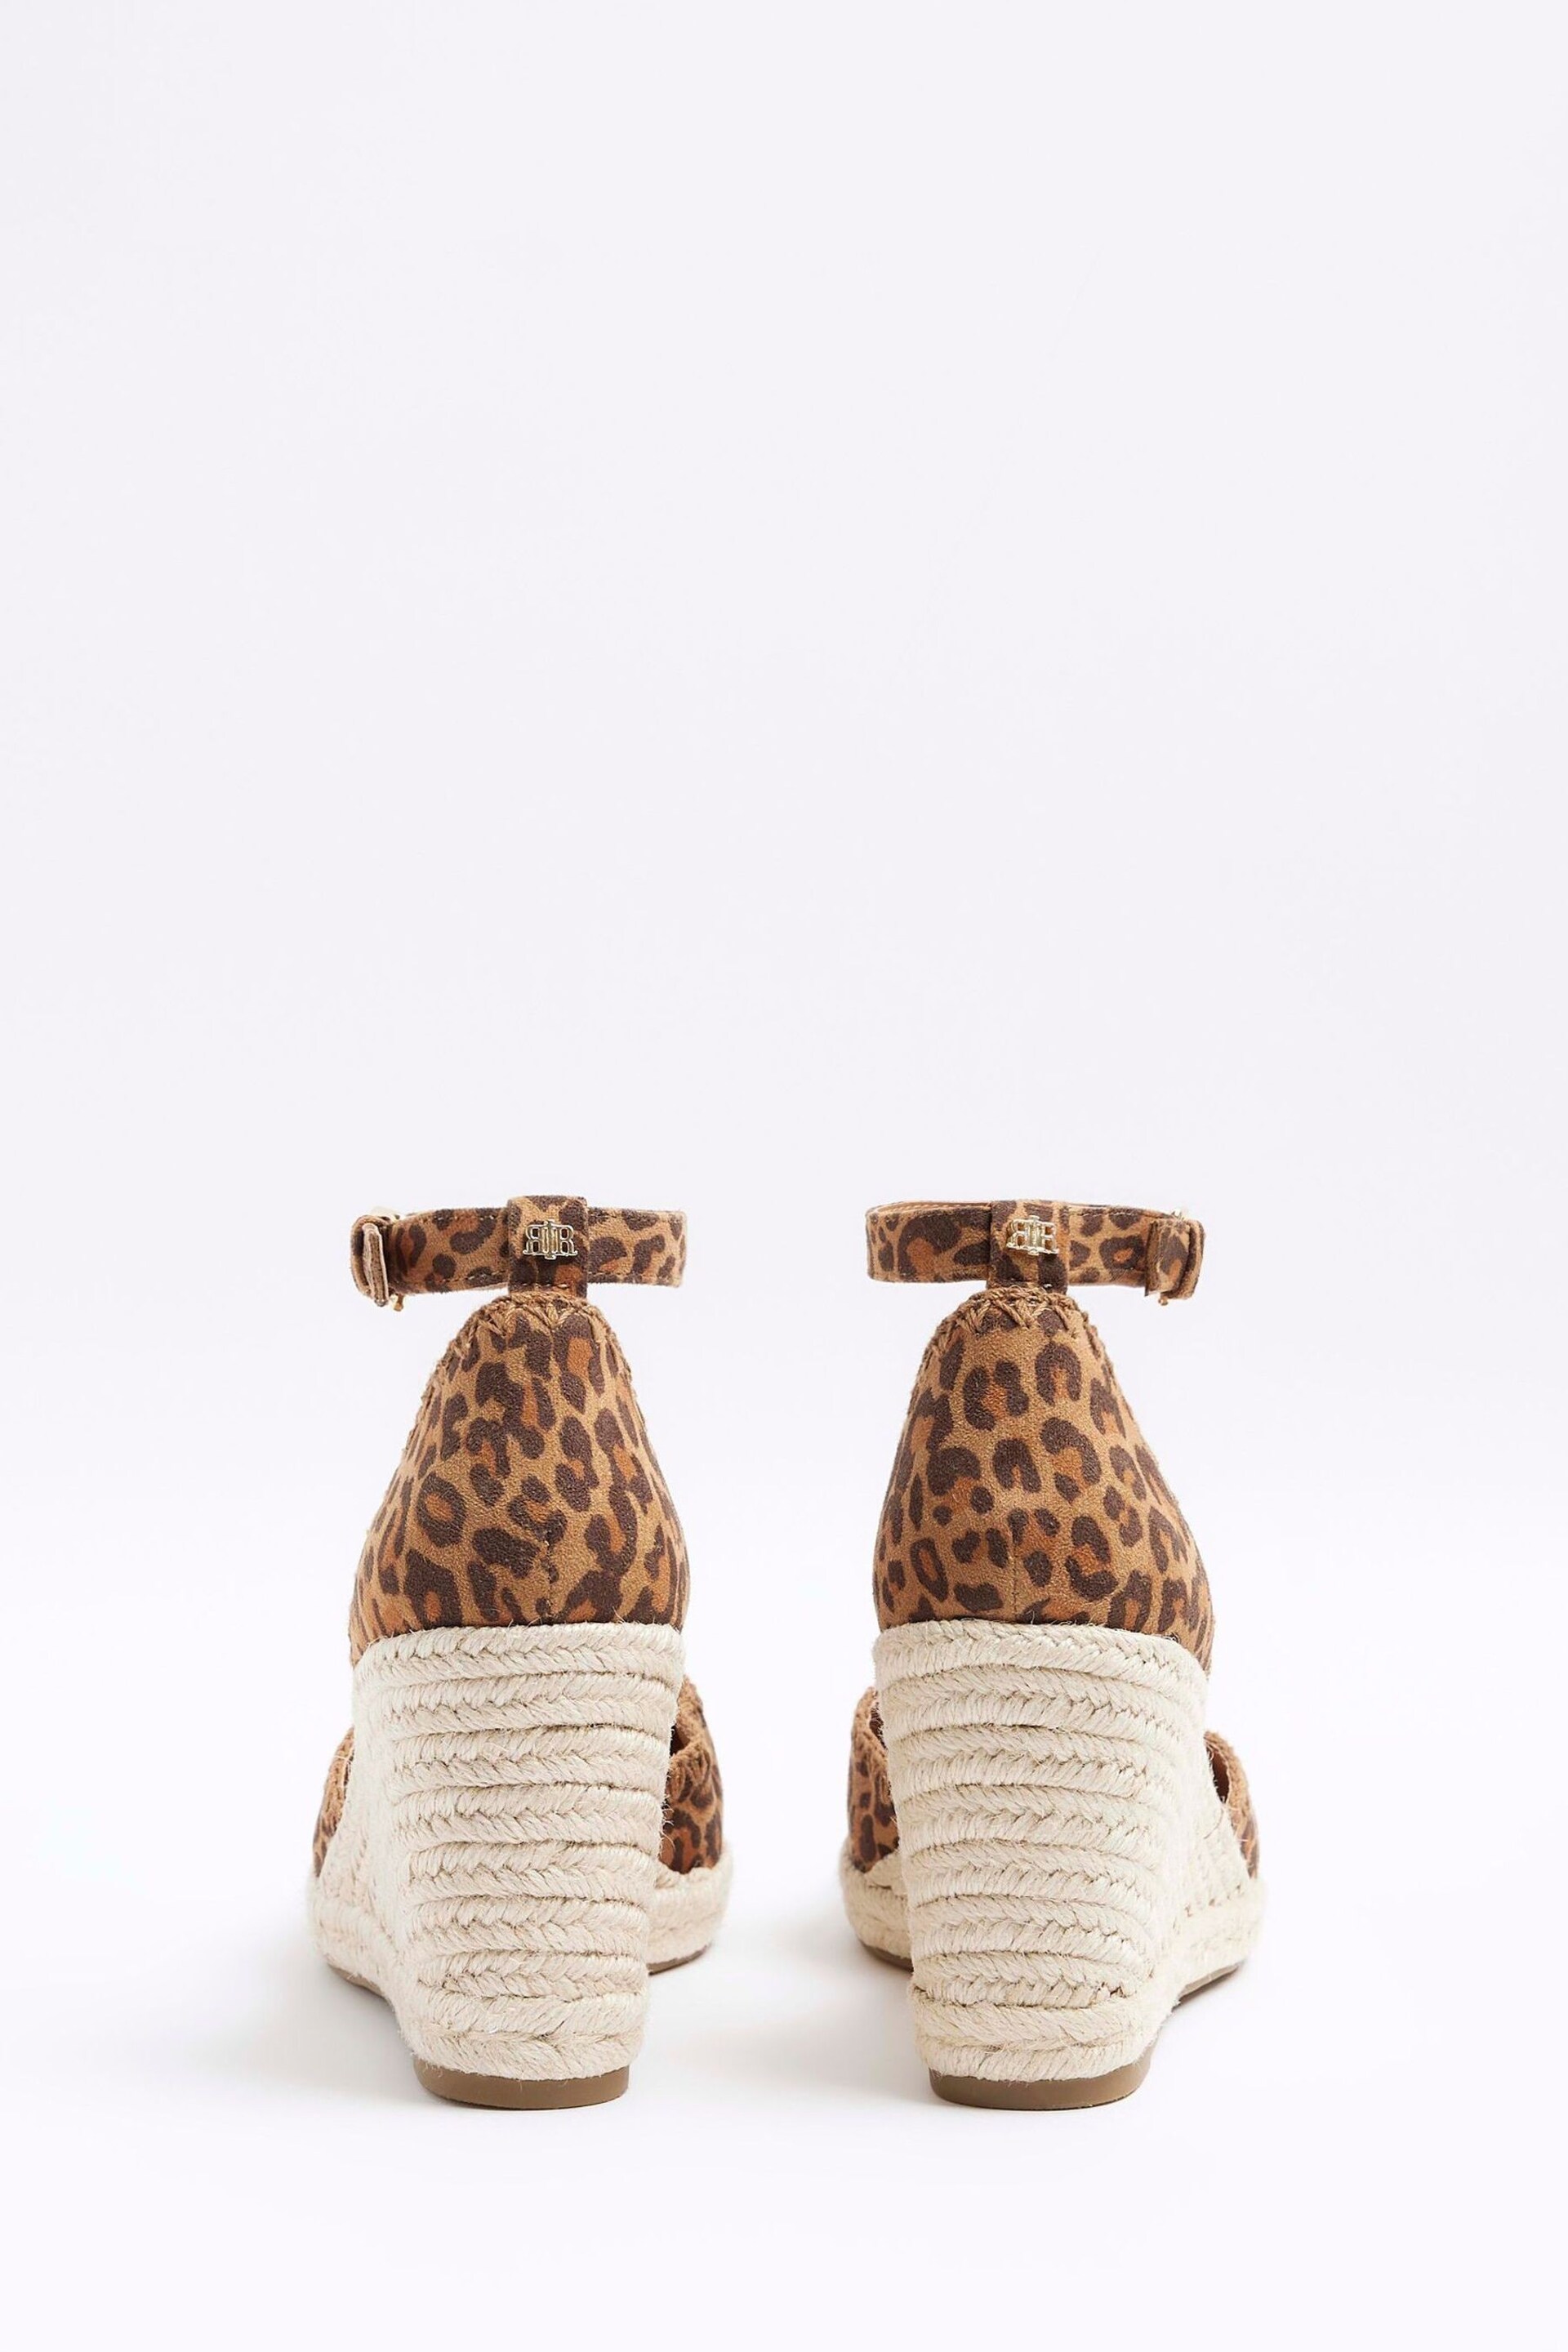 River Island Brown Leopard Espadrille Wedge Sandals - Image 4 of 5